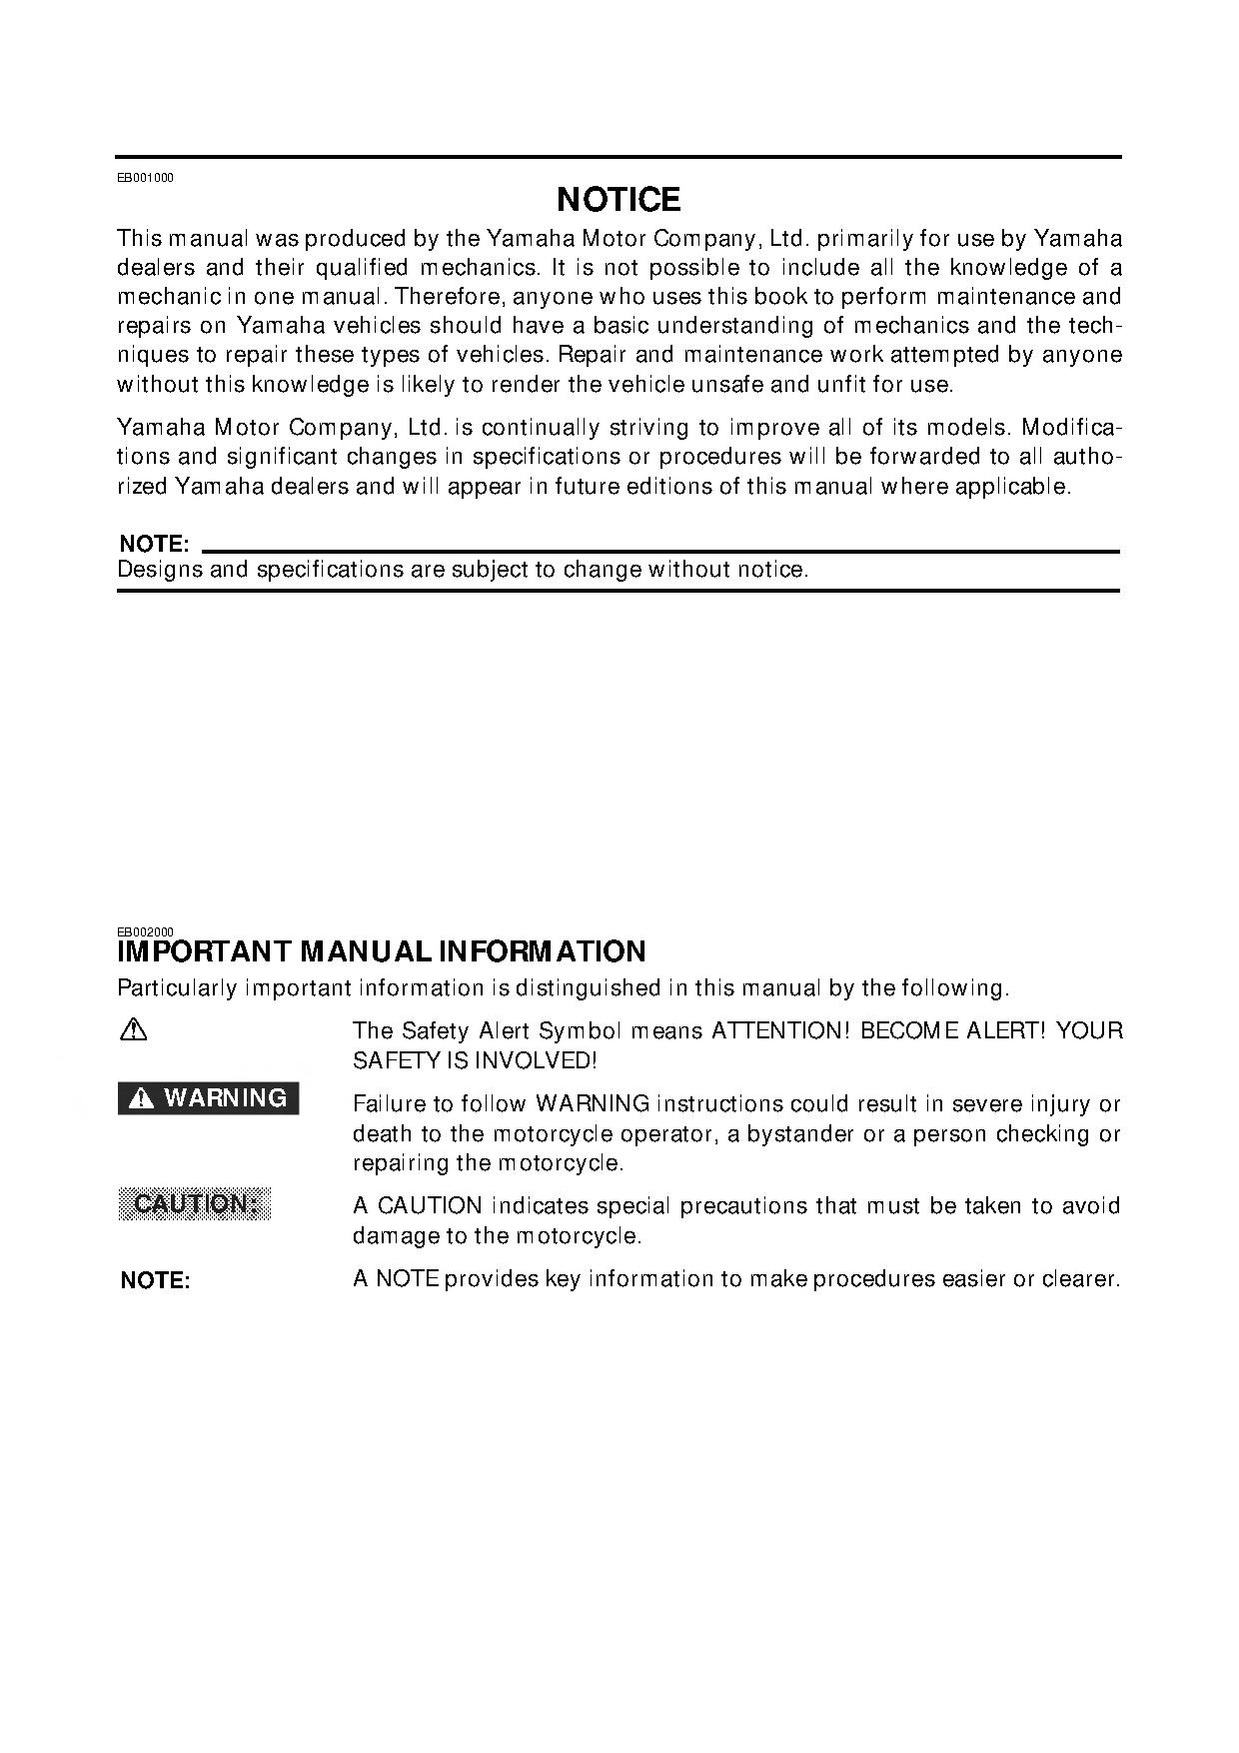 File:Yamaha YZF-R1 1998 Service Manual.pdf